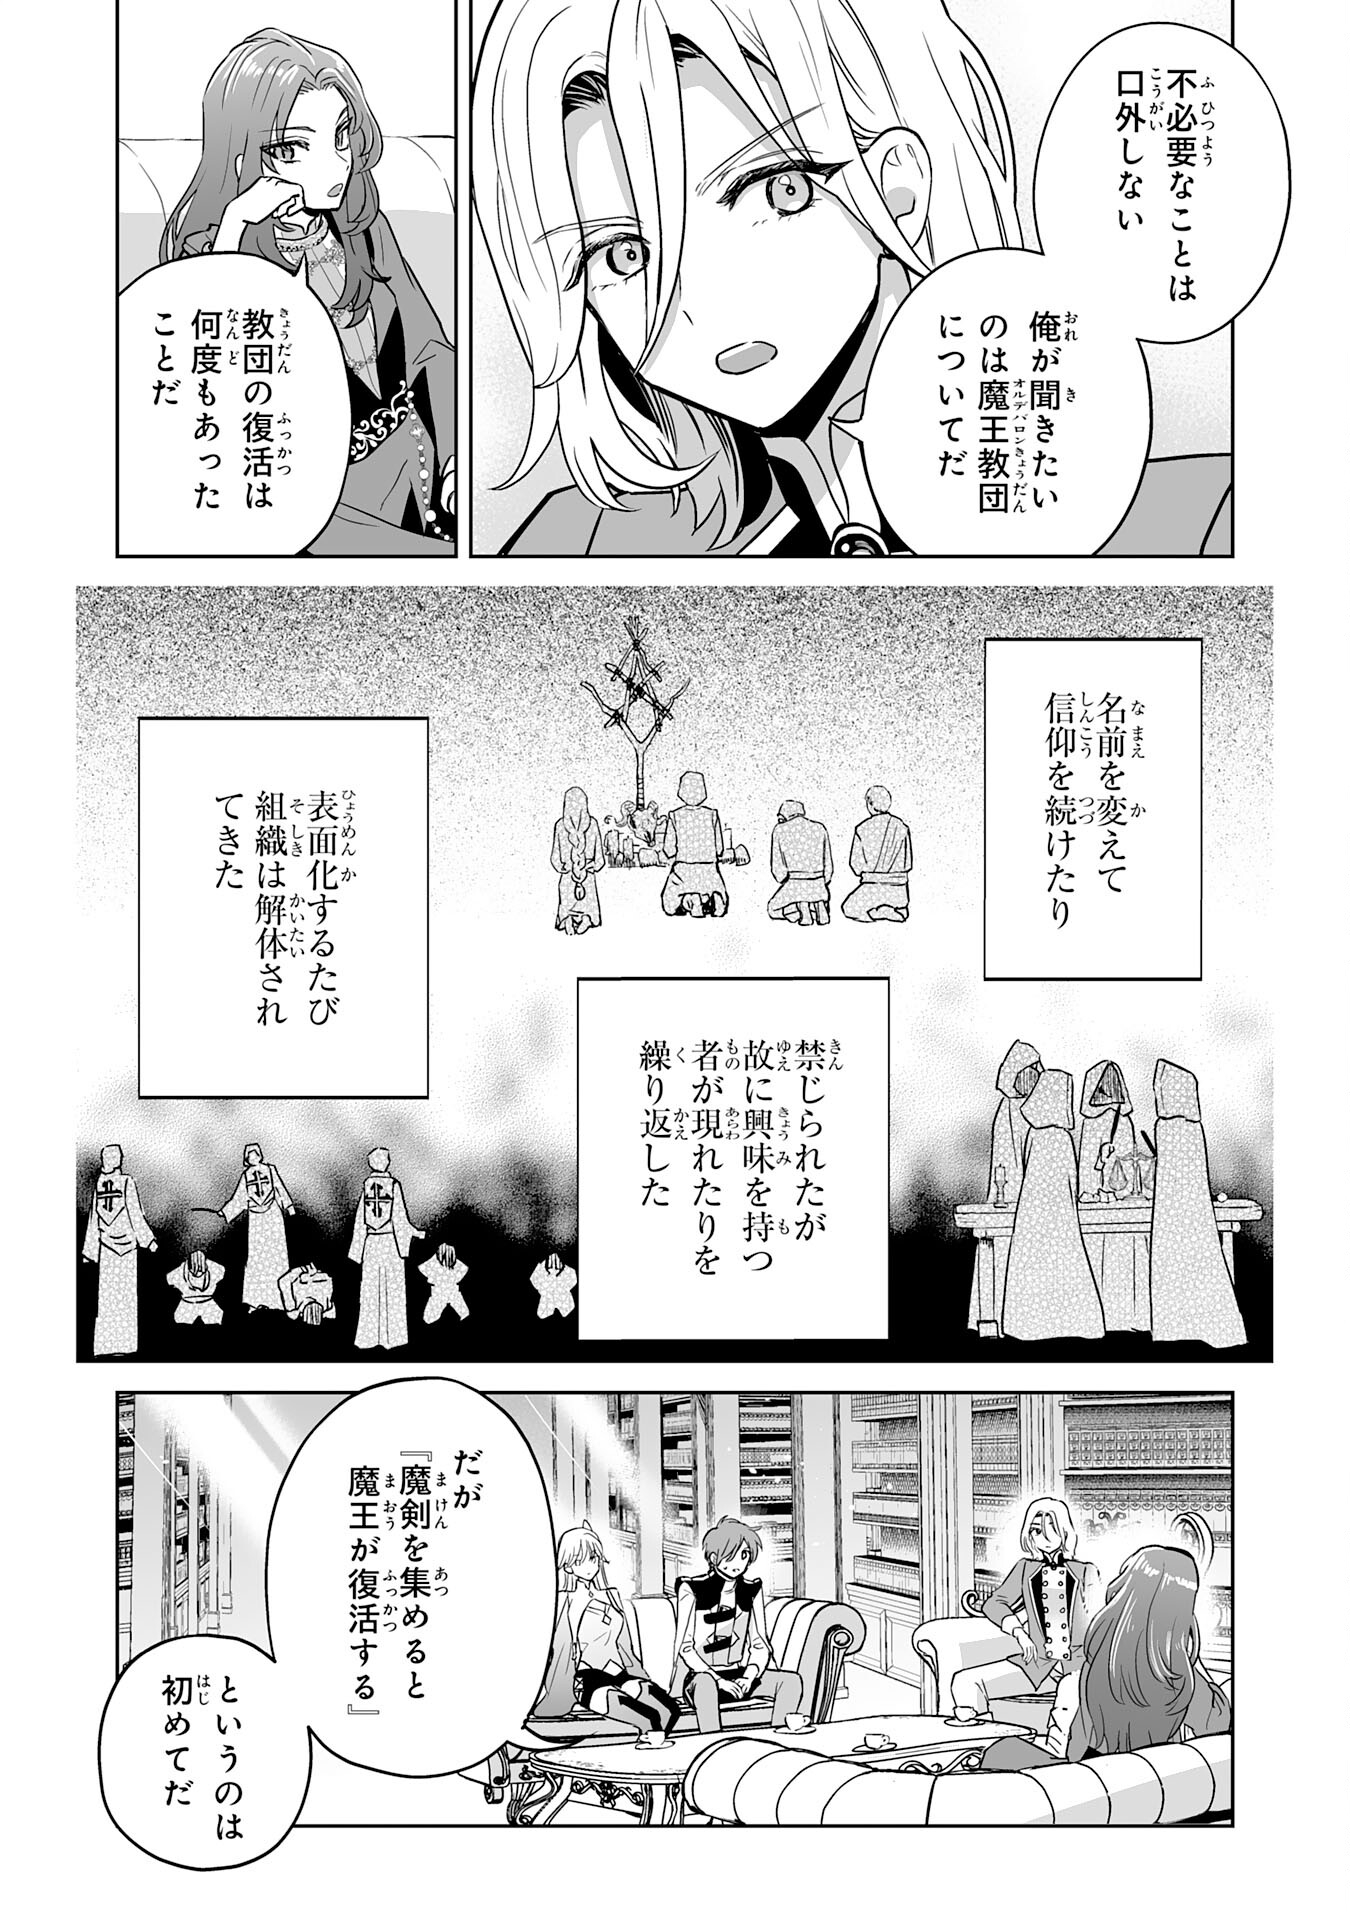 Ochikobore Makentsukai no Eiyuutan - Chapter 18 - Page 3